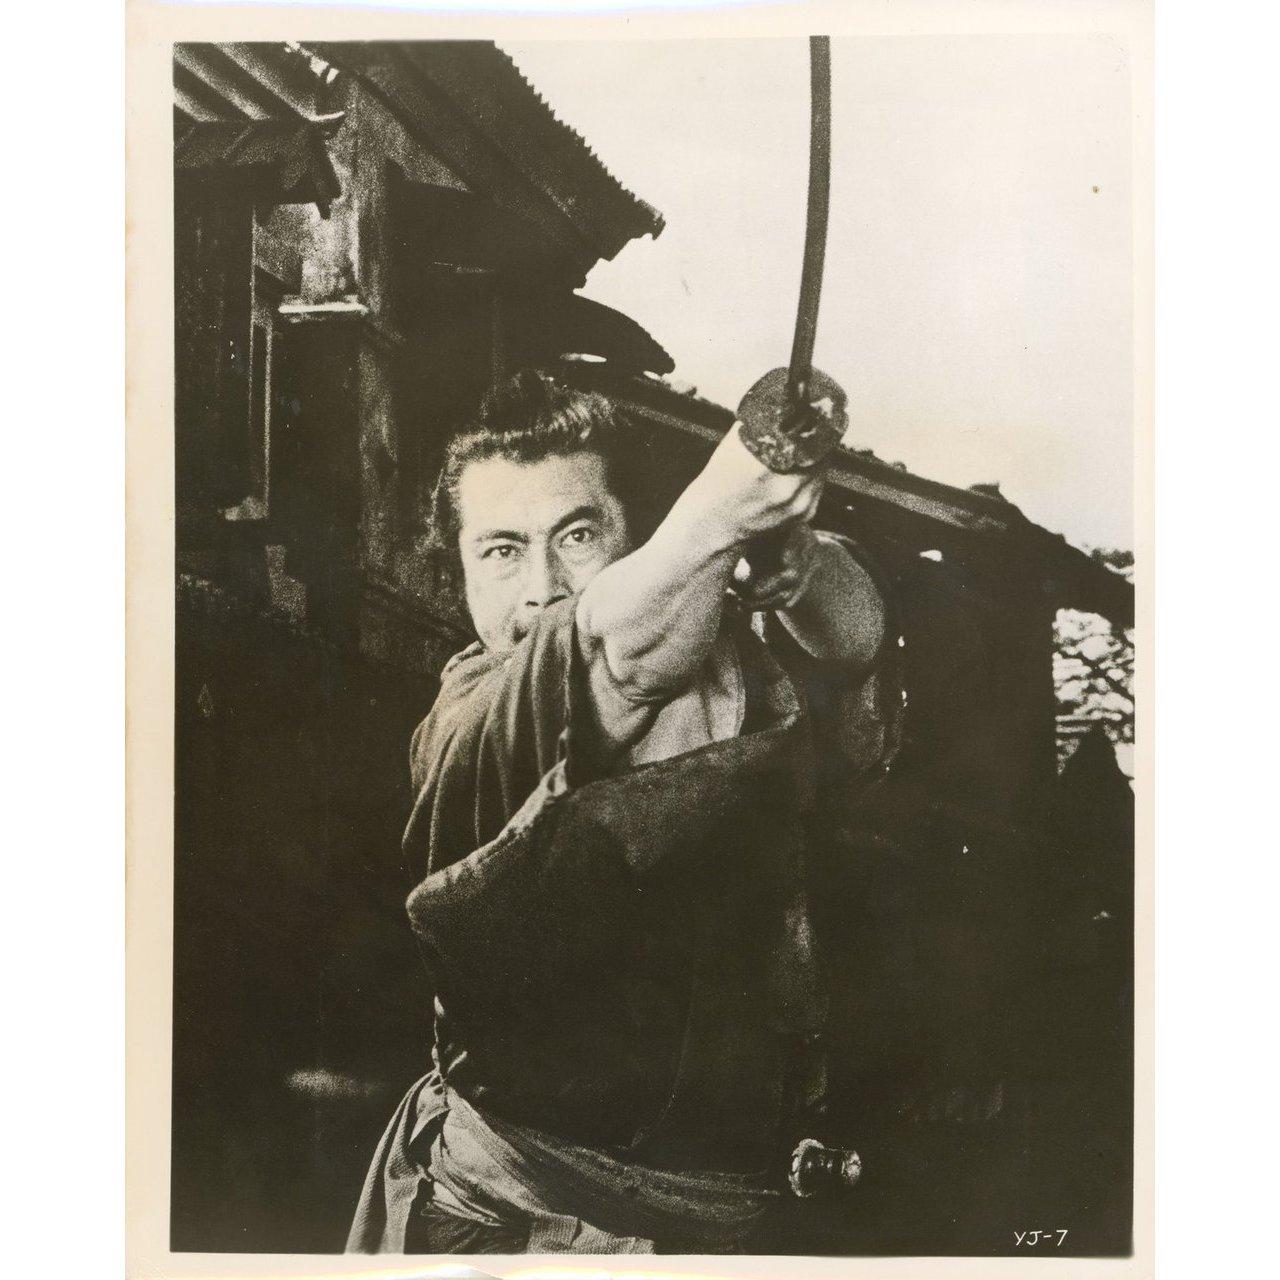 Original 1961 U.S. silver gelatin single-weight photo for the film Yojimbo directed by Akira Kurosawa with Toshiro Mifune / Tatsuya Nakadai / Yoko Tsukasa / Isuzu Yamada. Very good-fine condition, curling. Please note: the size is stated in inches